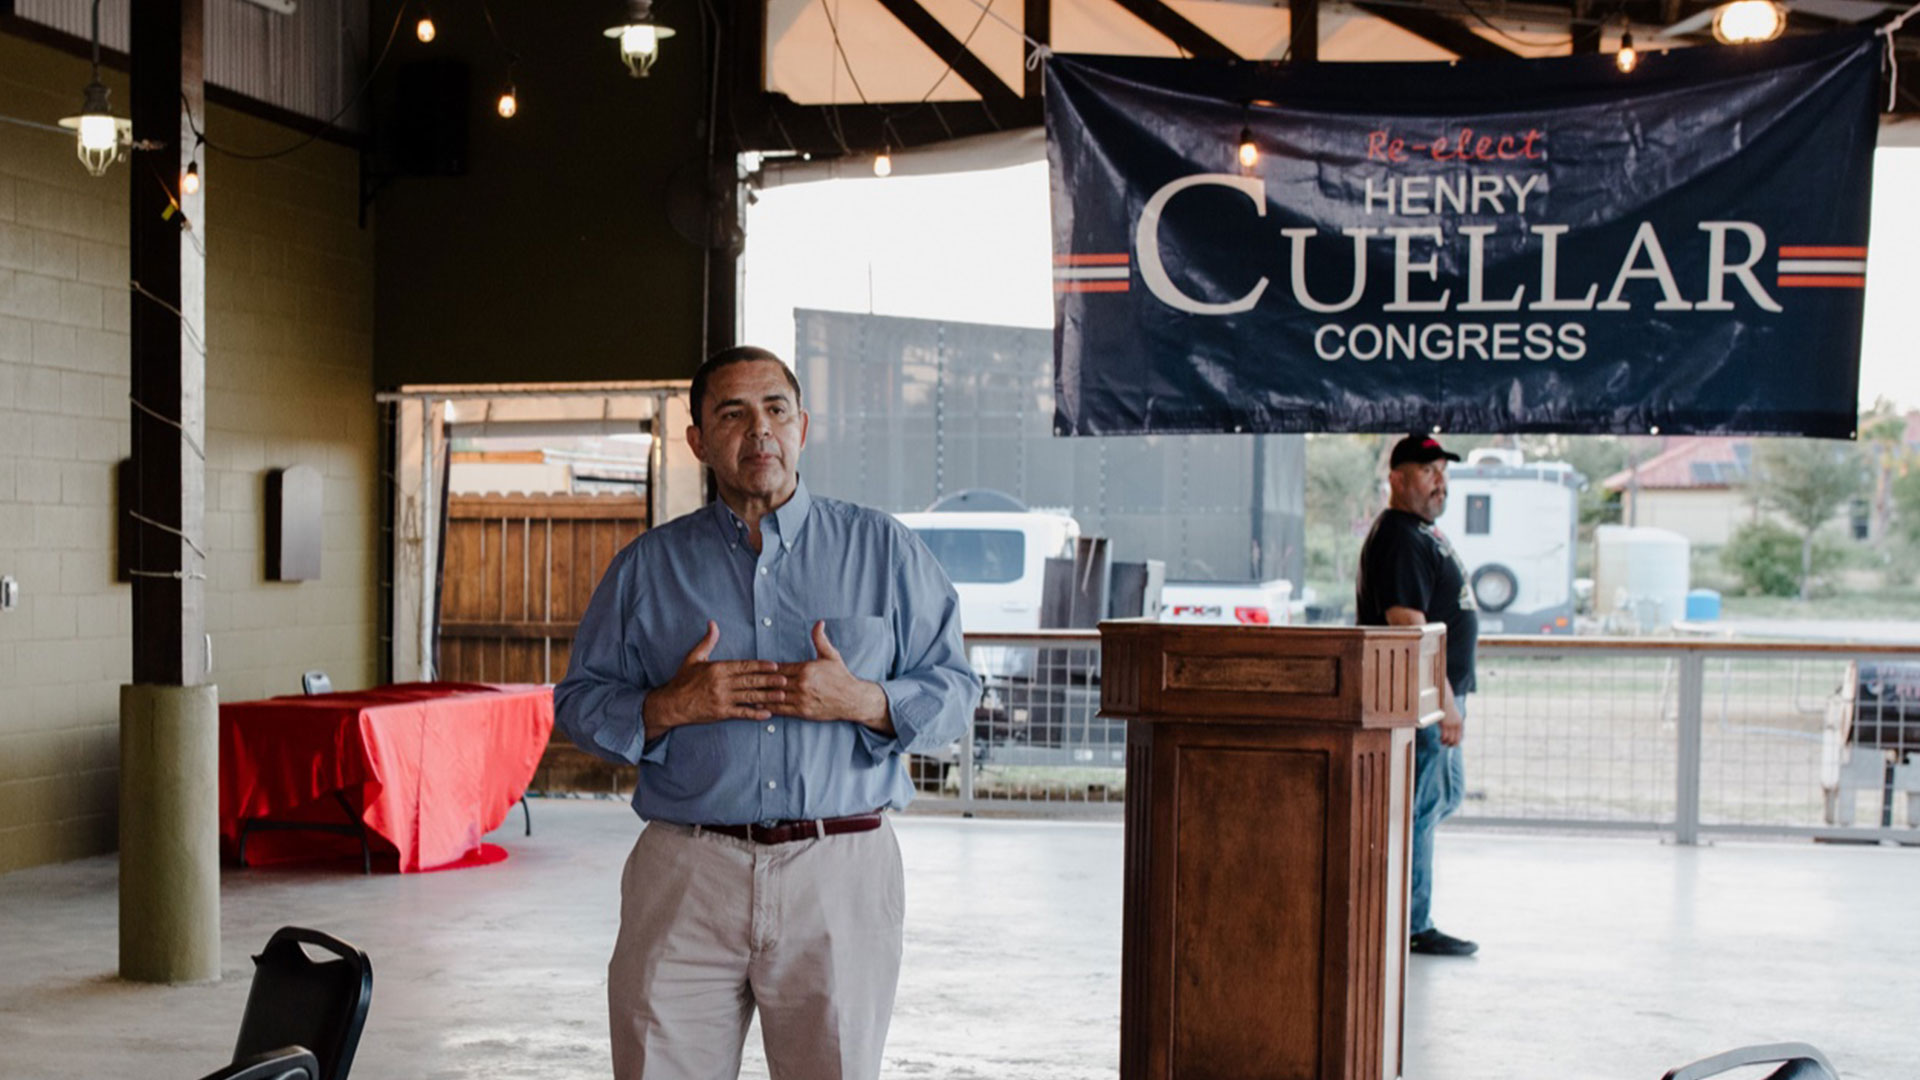 Support Congressman Cuellar (Event Photos)